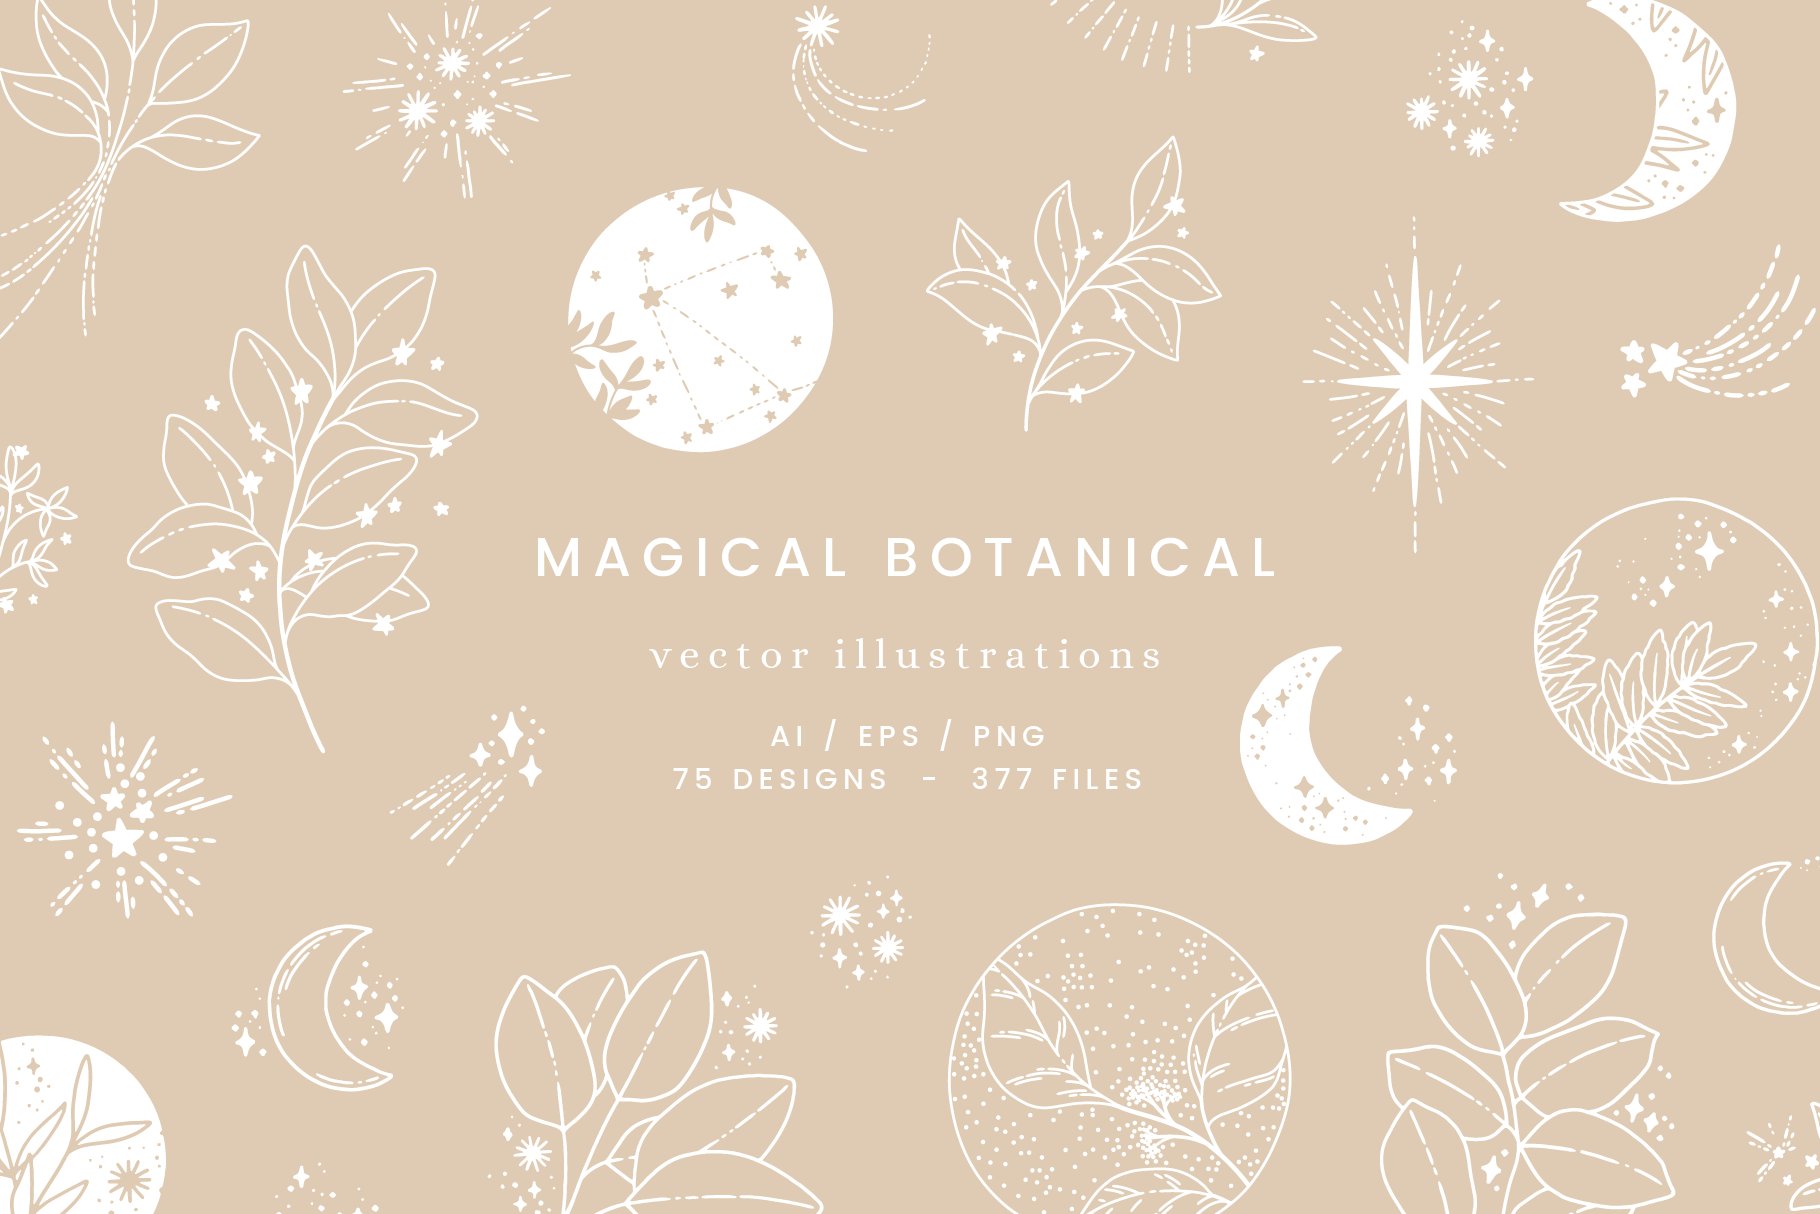 Magical Botanical lllustrations cover image.